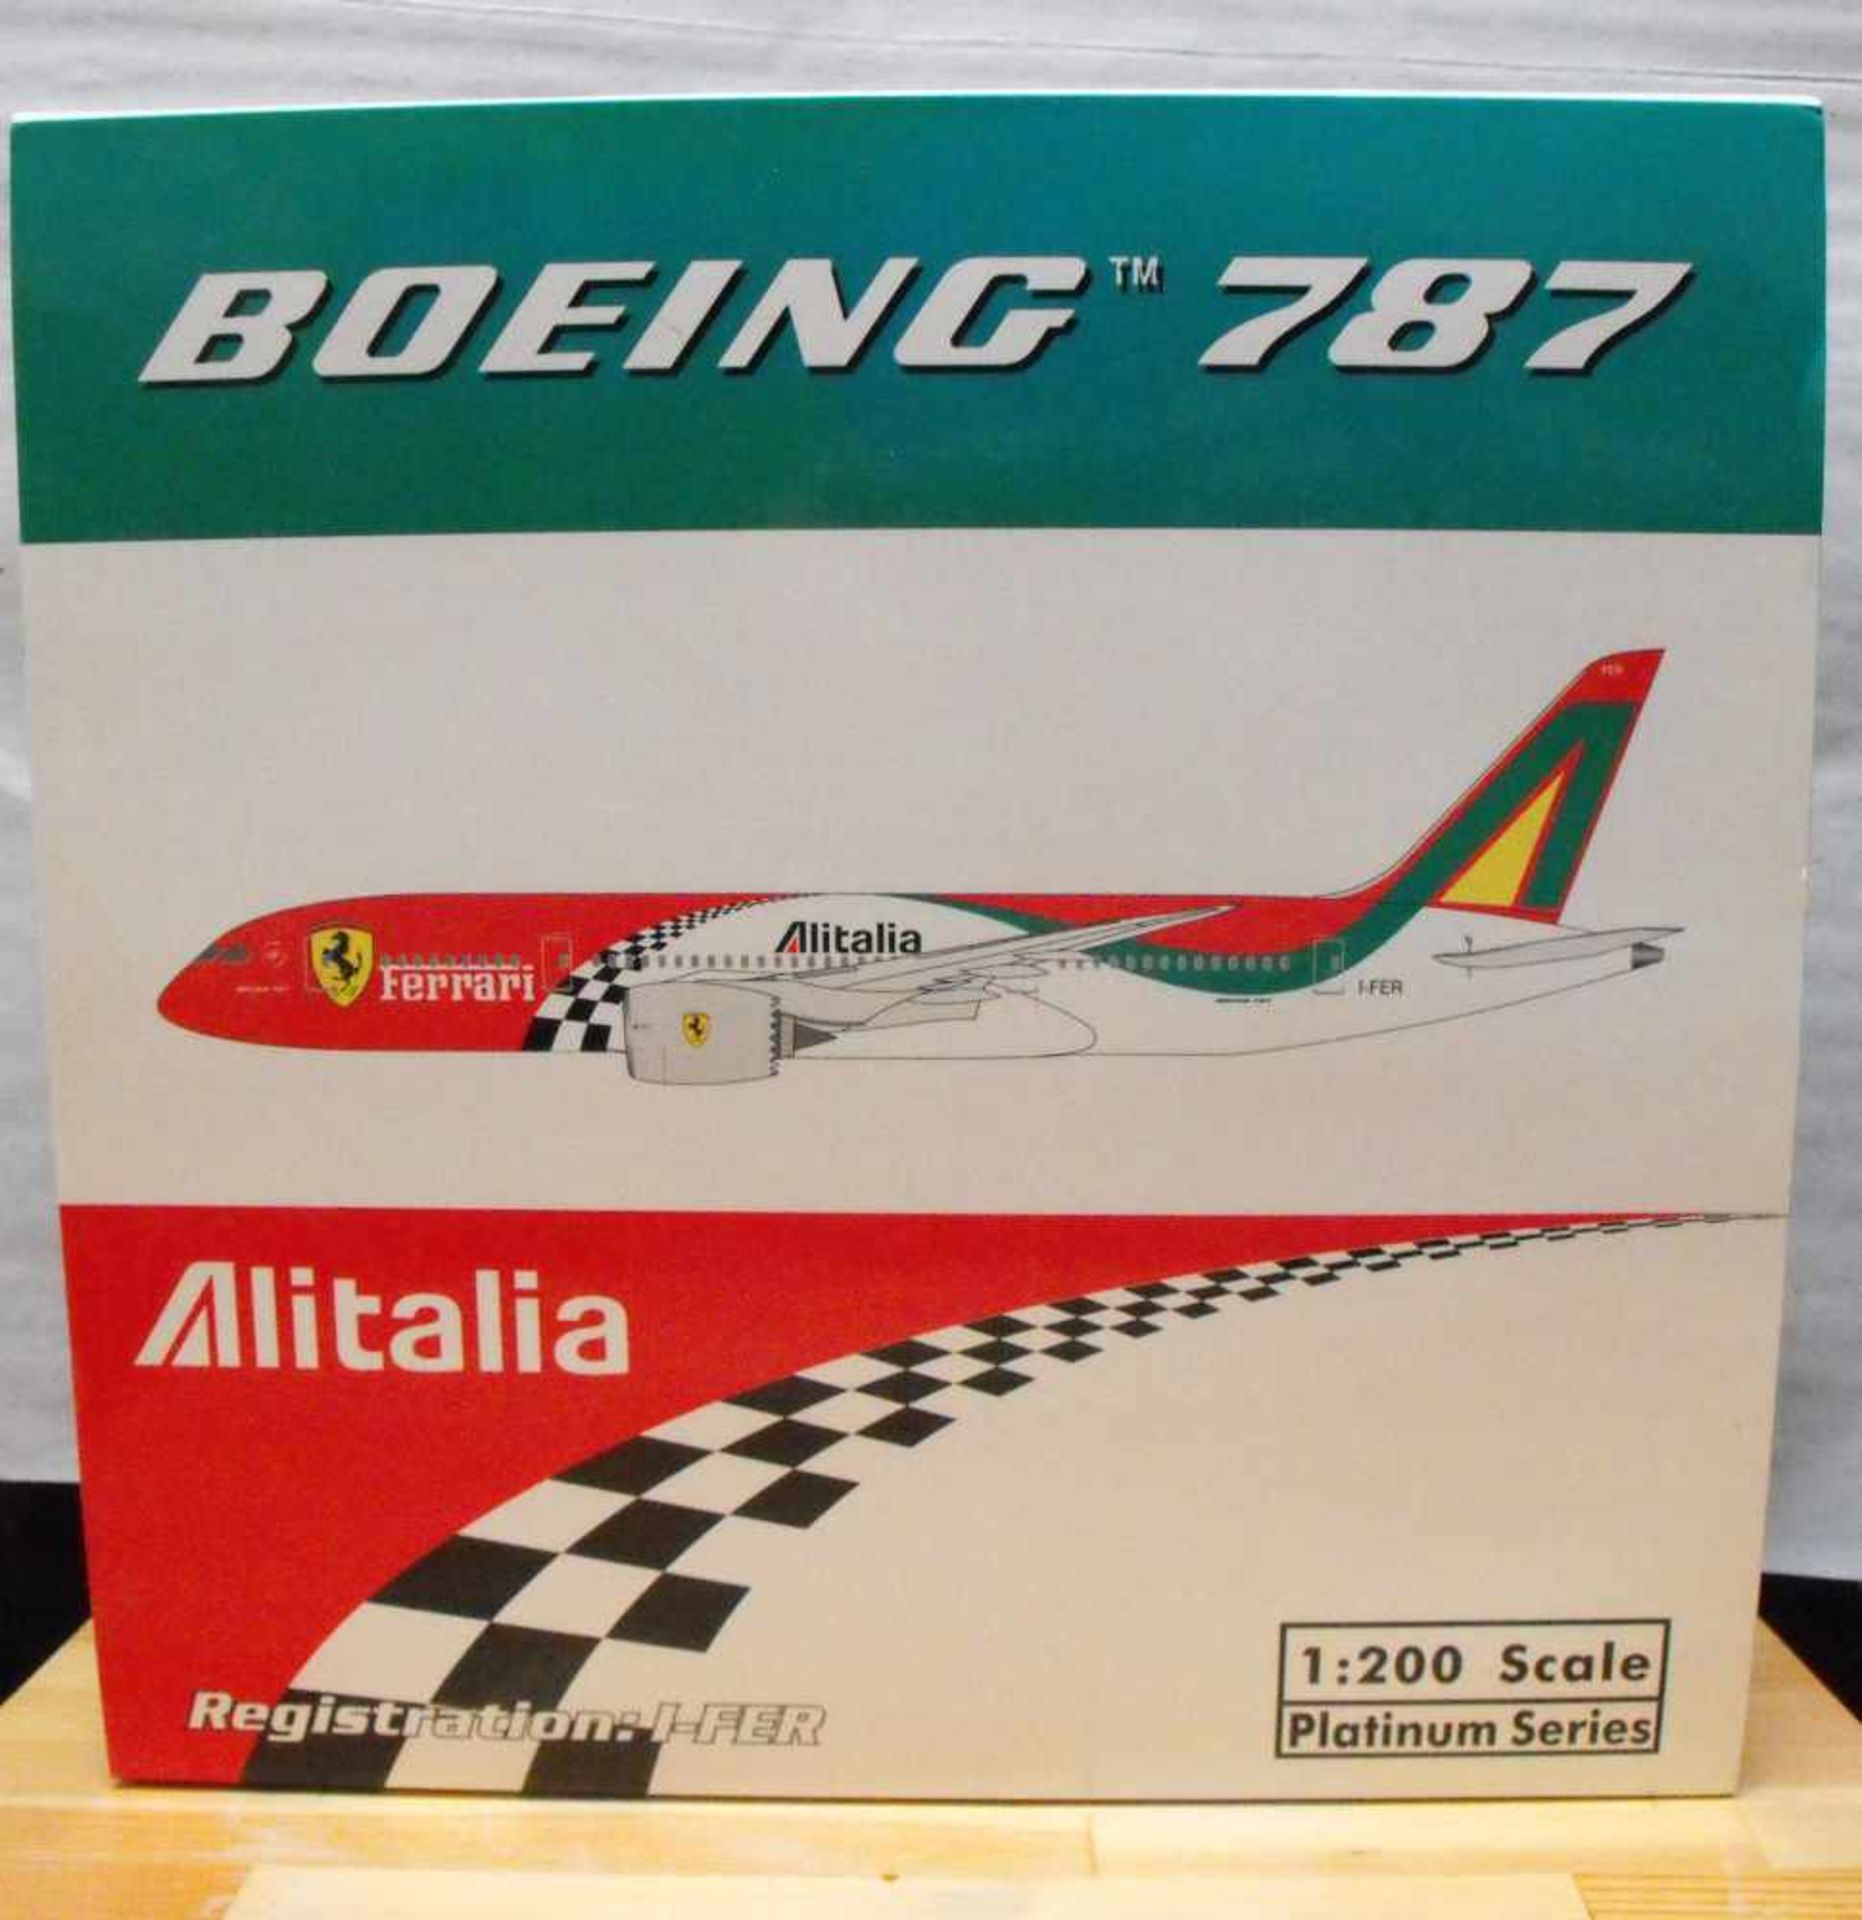 Phoenix 1/200 Alitalia "Ferrari librea" Boeing 787 "Very Rare" Reg # i-Fer 787 1:200 Model - Image 2 of 4